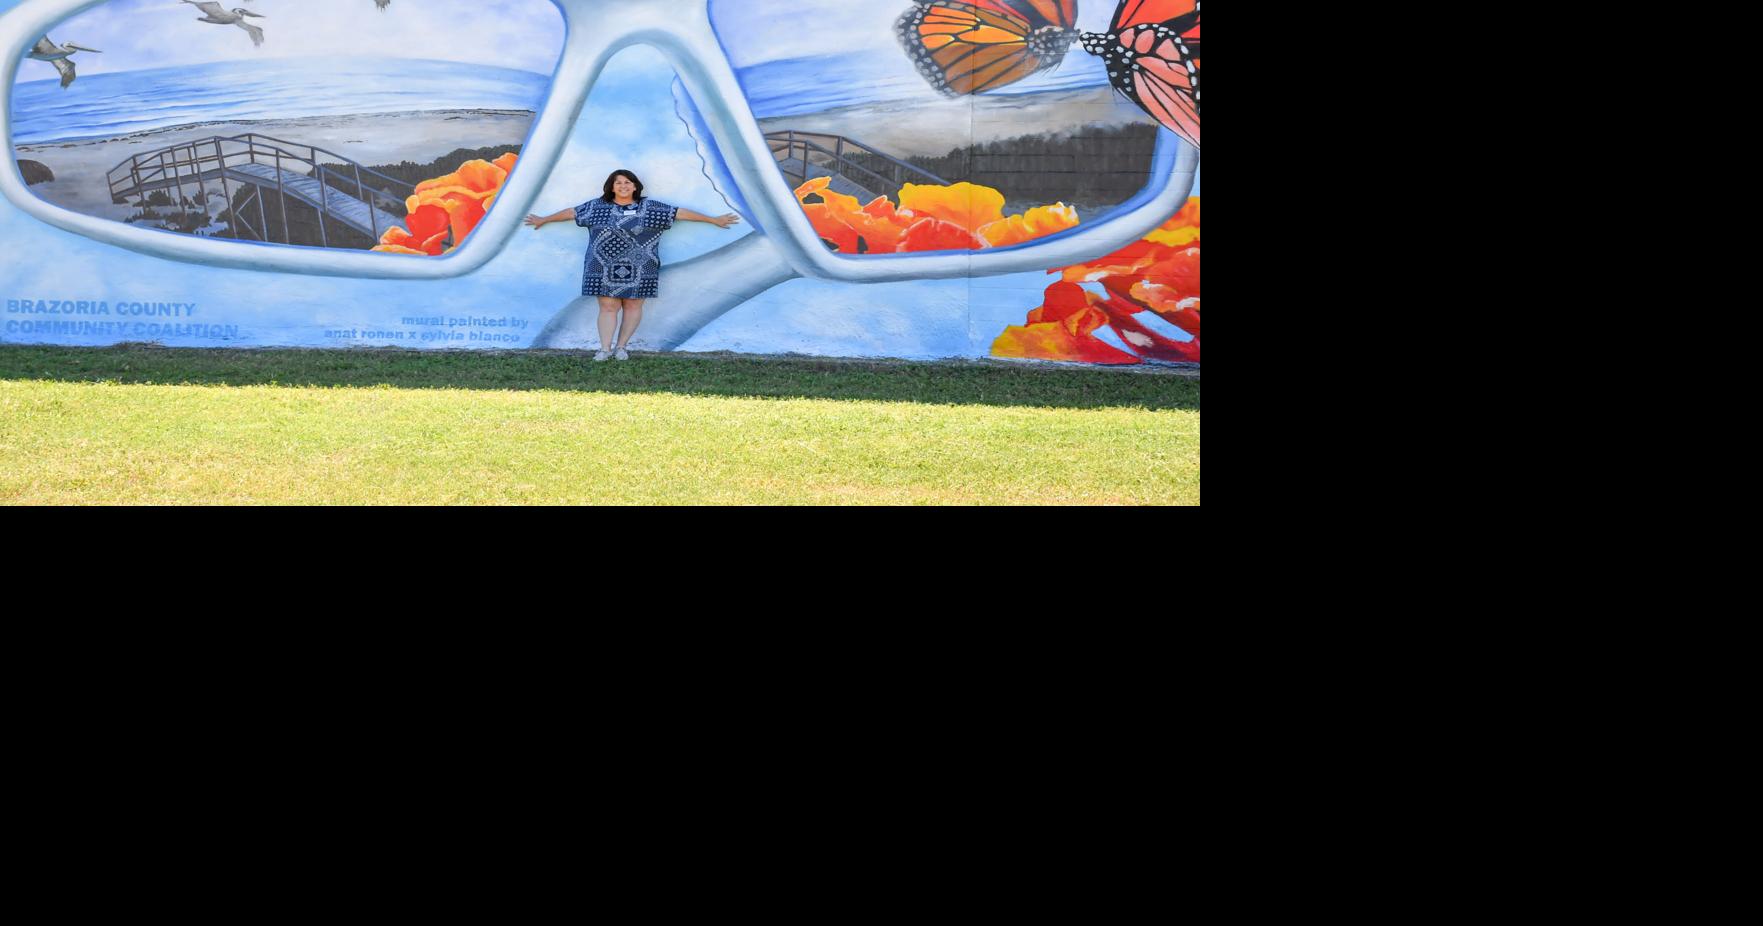 Freeport mural hopes to bring joy to community | News